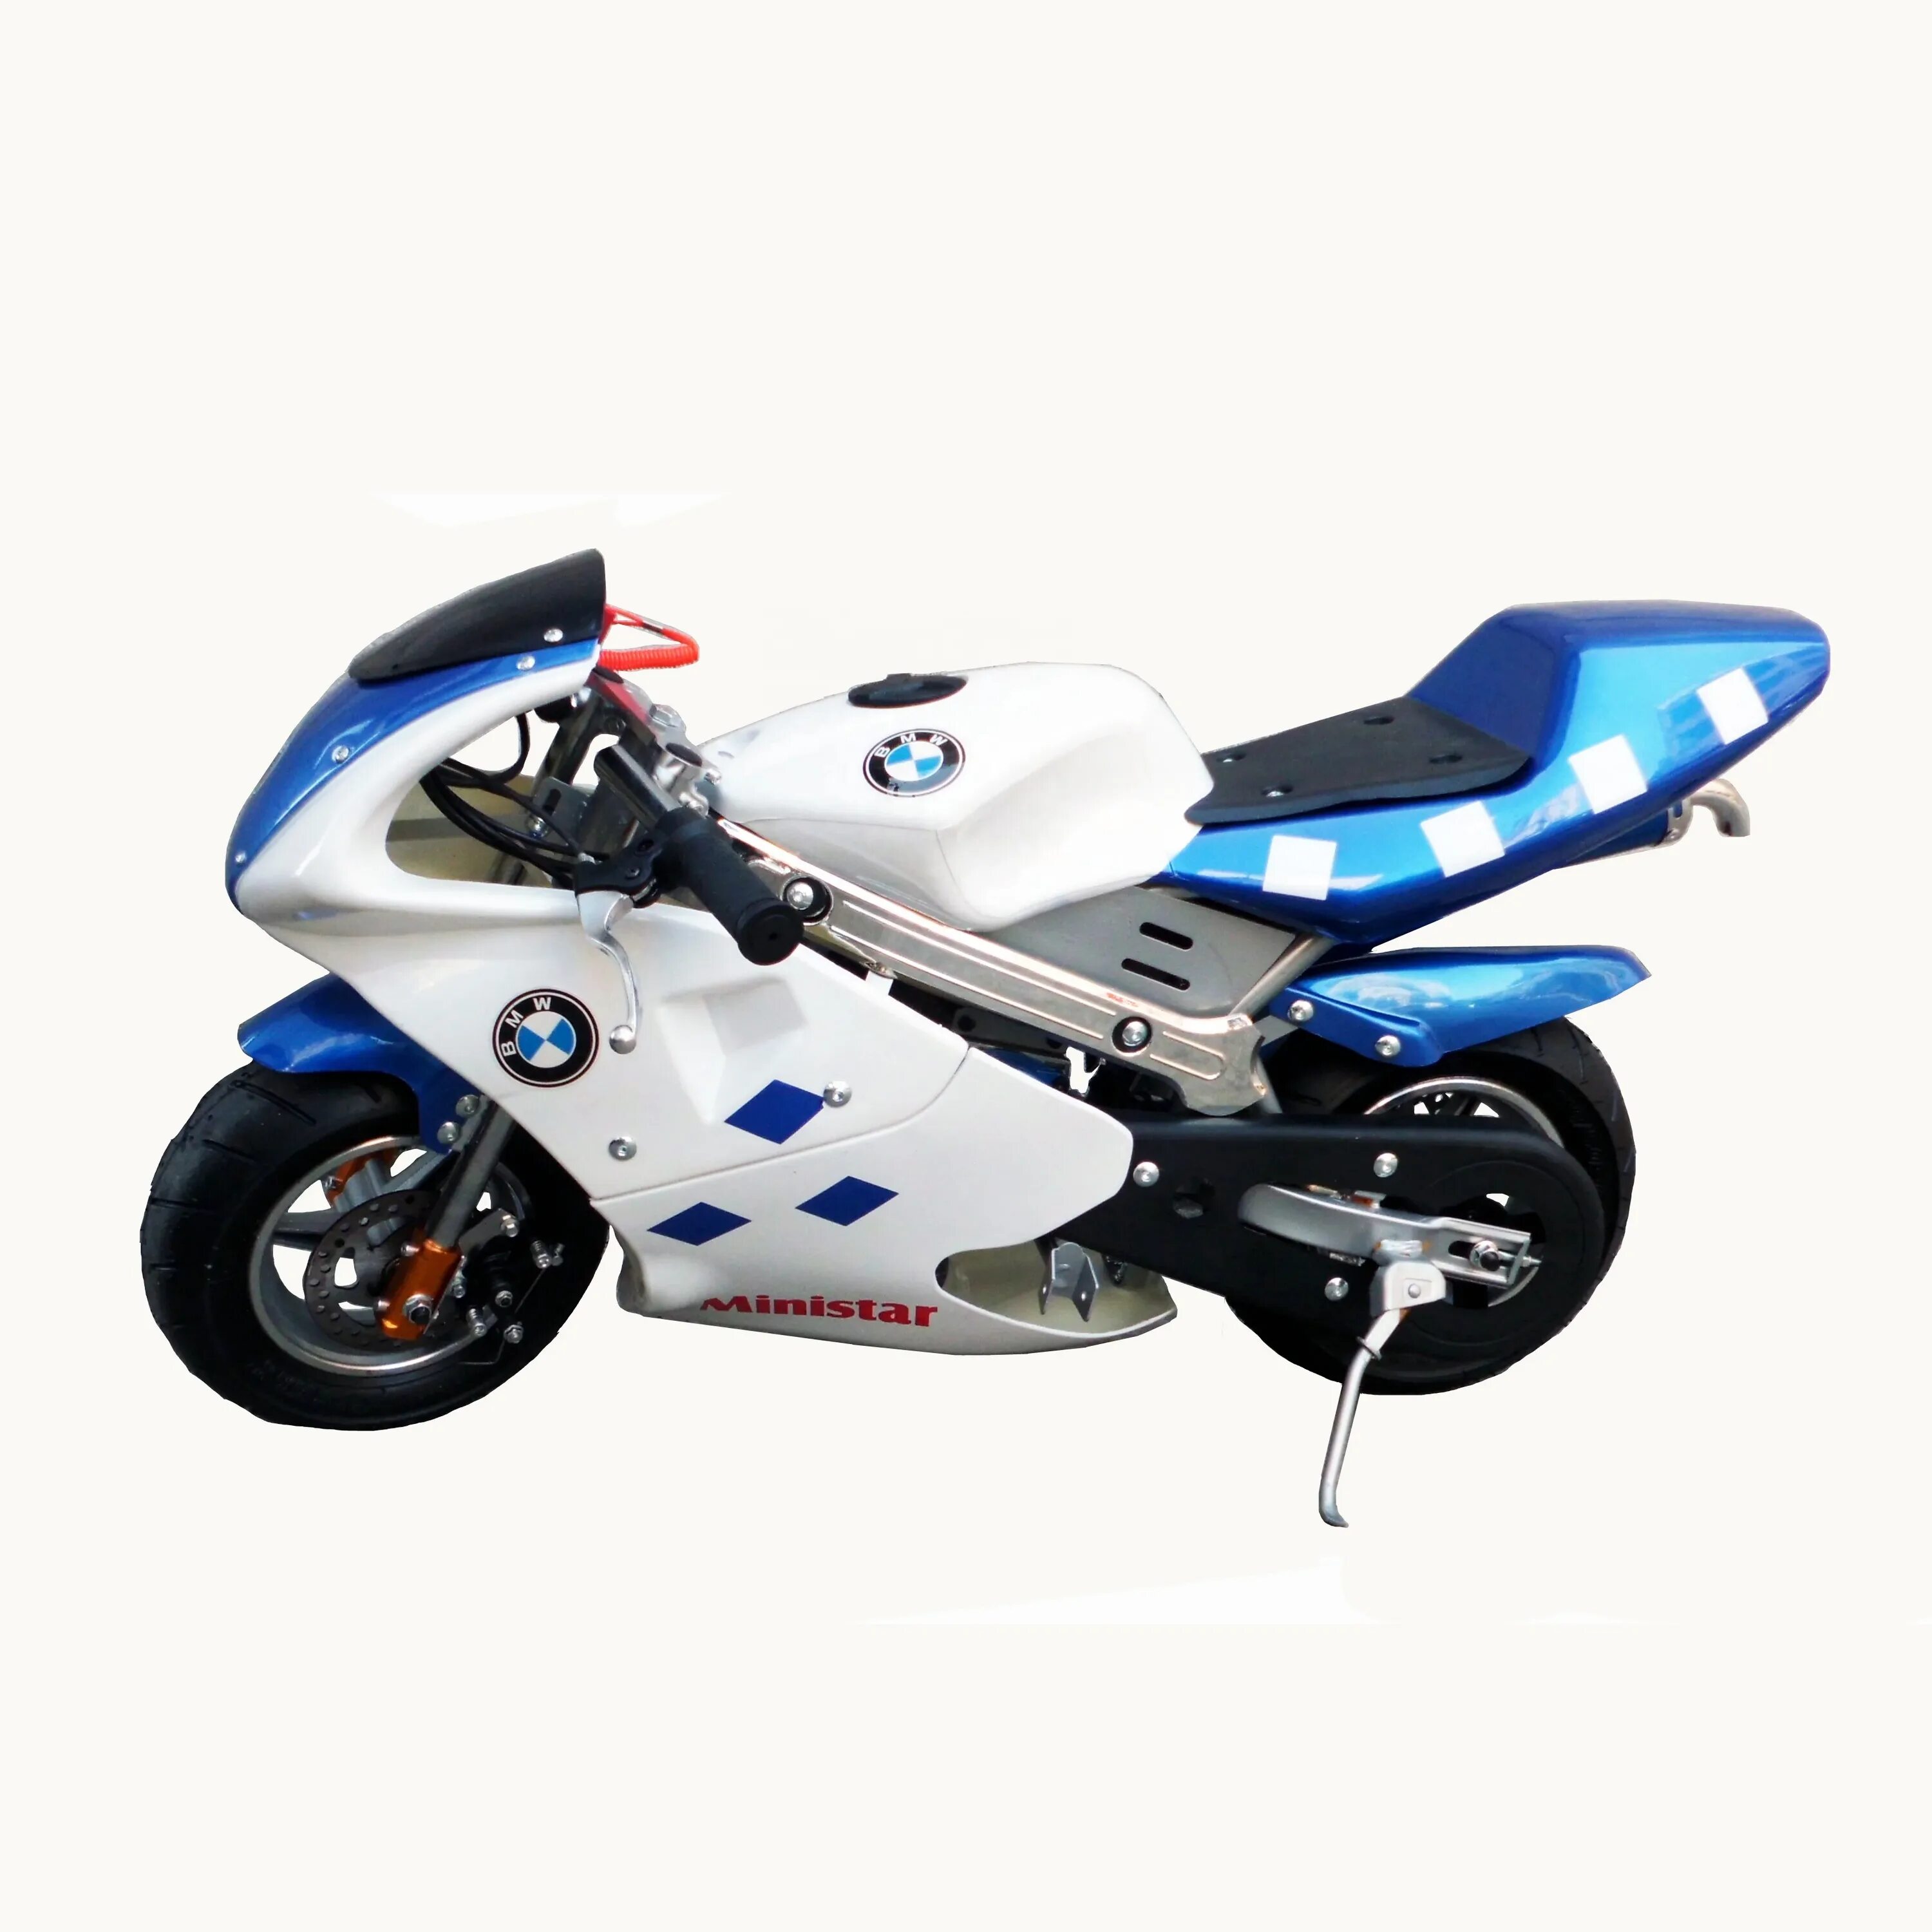 Mini Moto Bike 49cc. Pocket Bike 49cc. Минибайк бензиновый 49 см3. VMS 49cc мотоцикл детский. Купить детский мопед